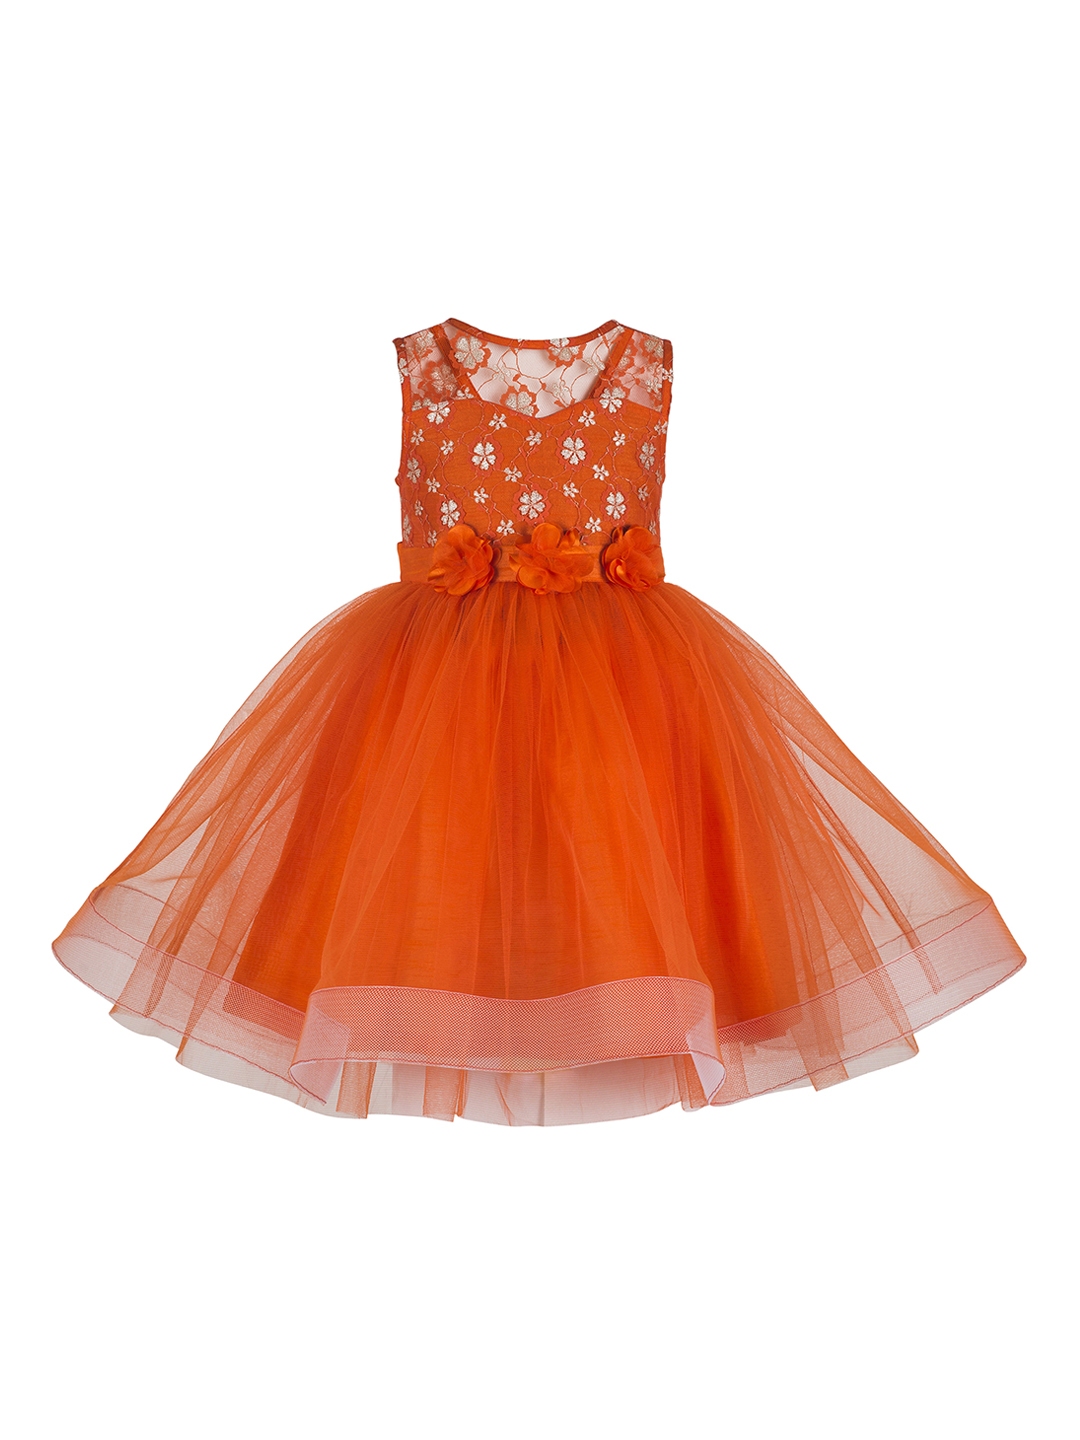 orange gown for kids